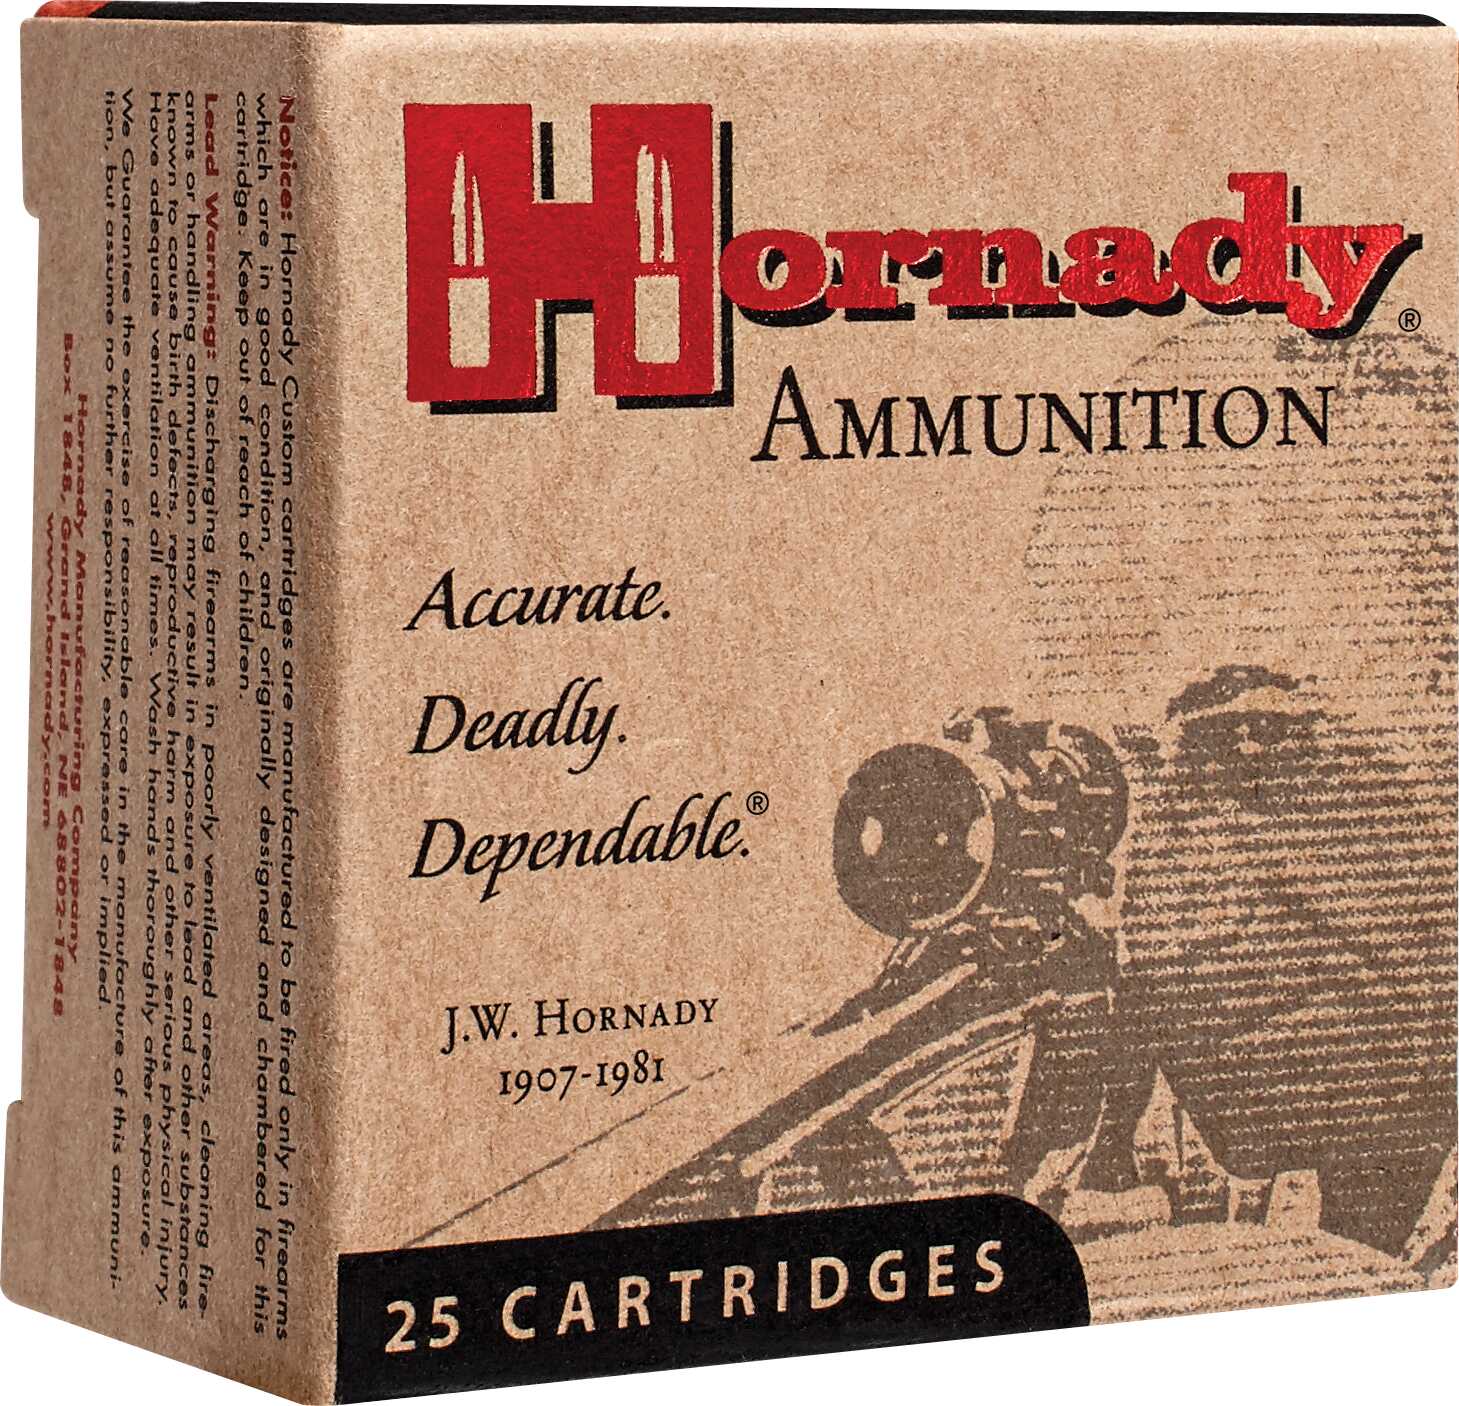 44 Rem Mag 300 Grain Hollow Point 20 Rounds Hornady Ammunition Magnum